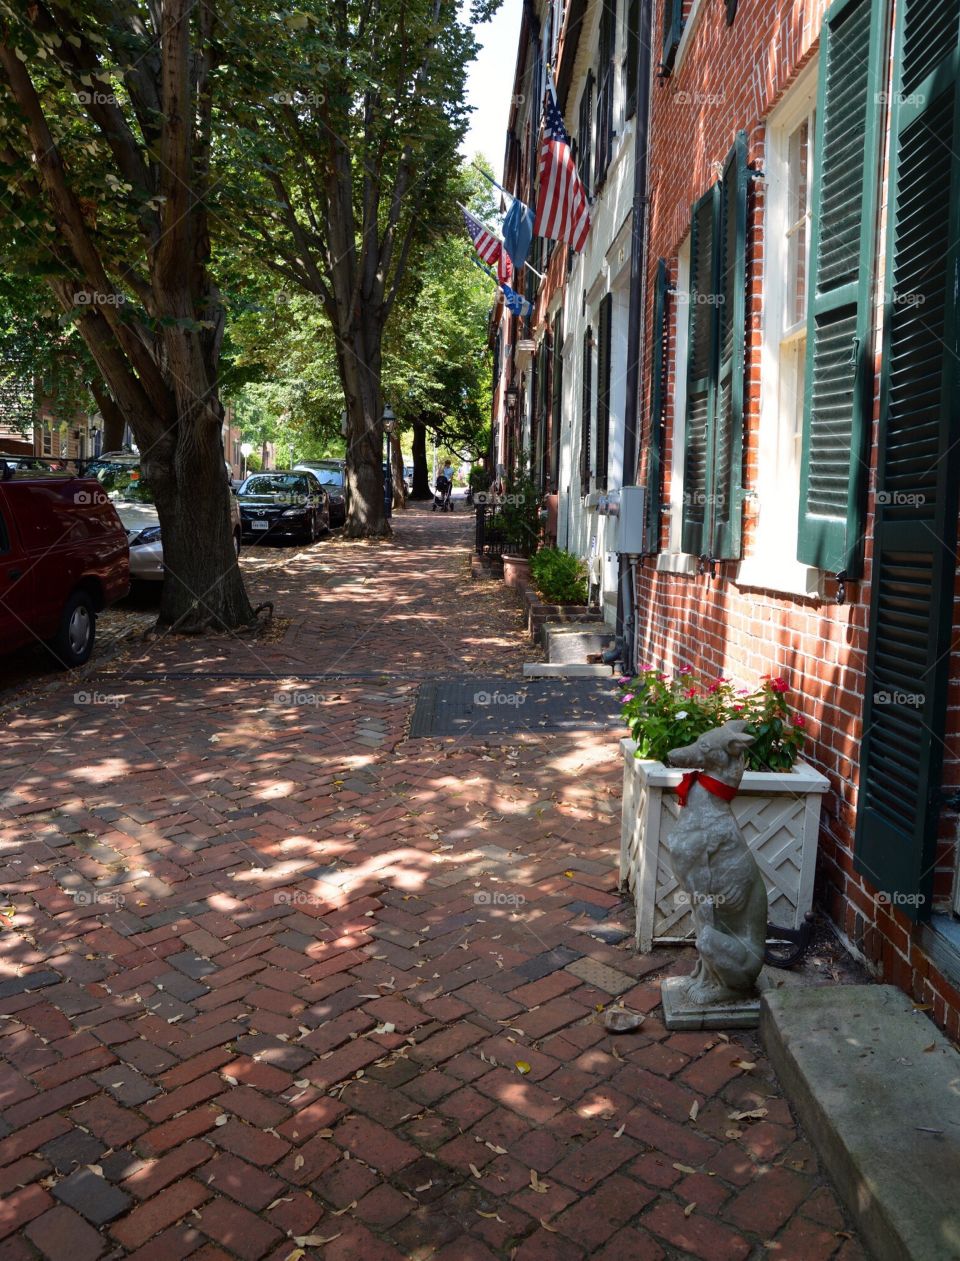 Historic street in Old Town, Alexandria, Virginia